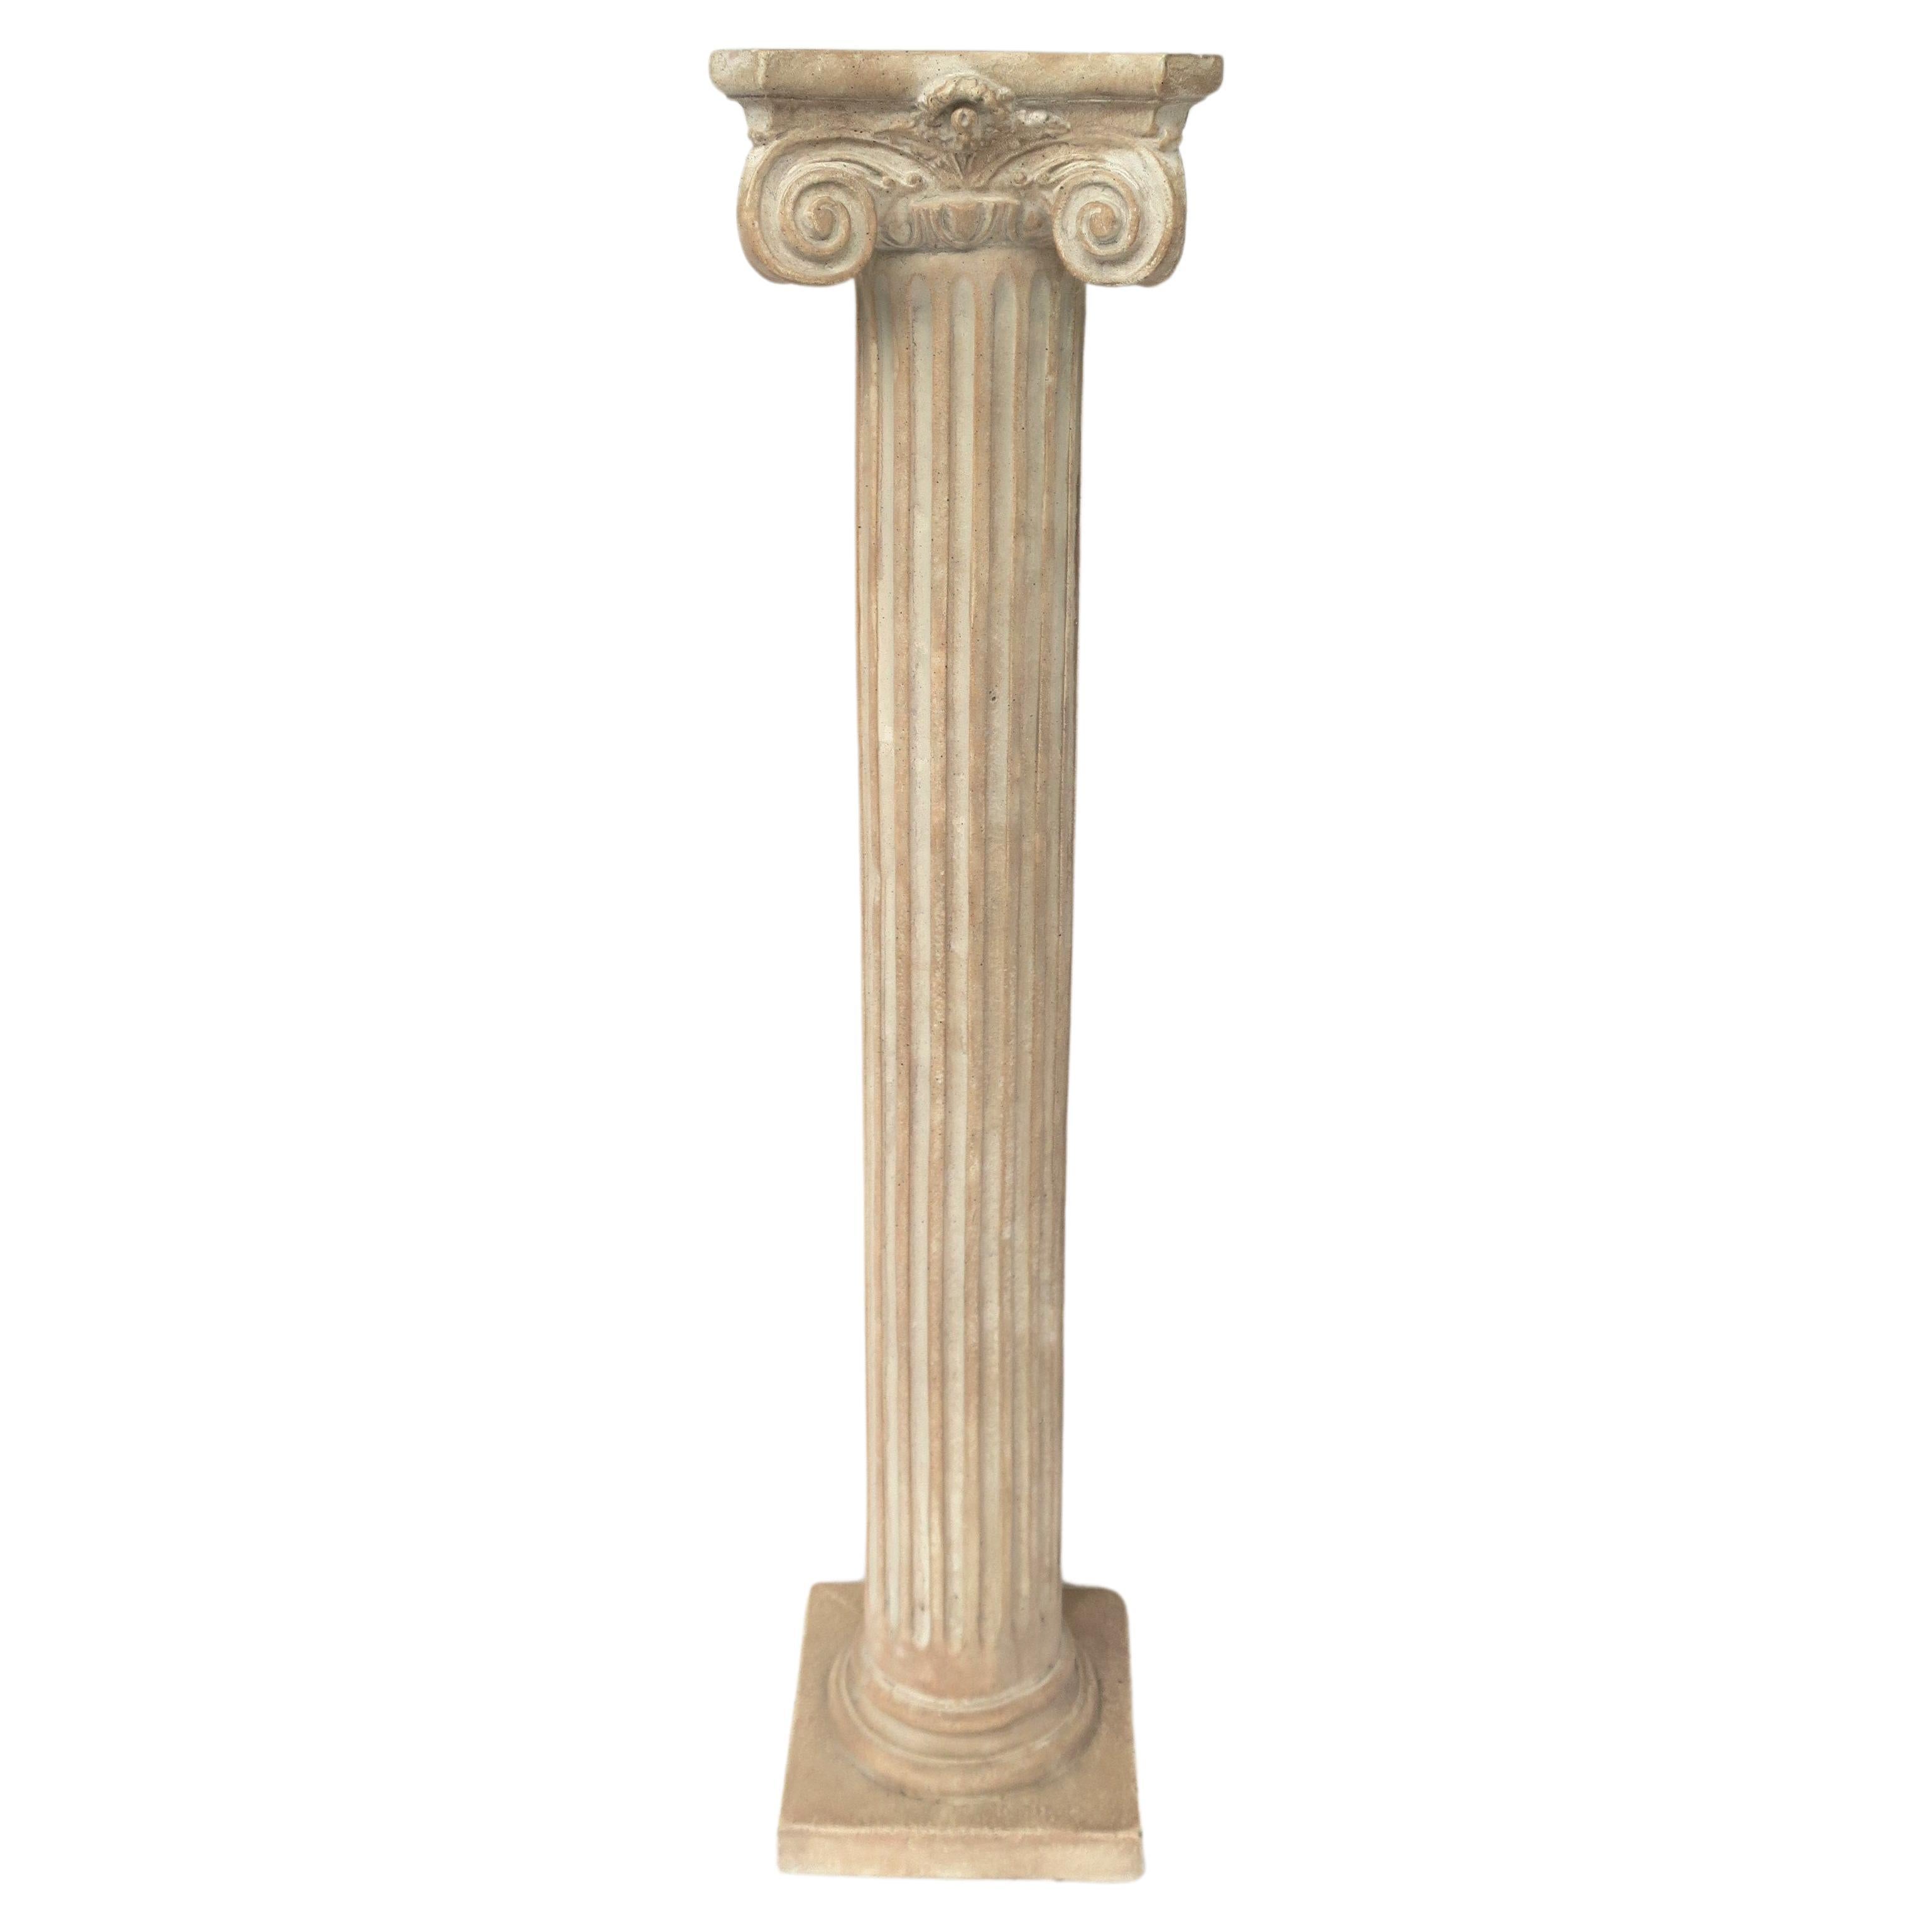 The Pedestal Column Pillar Stand Neoclassical Style